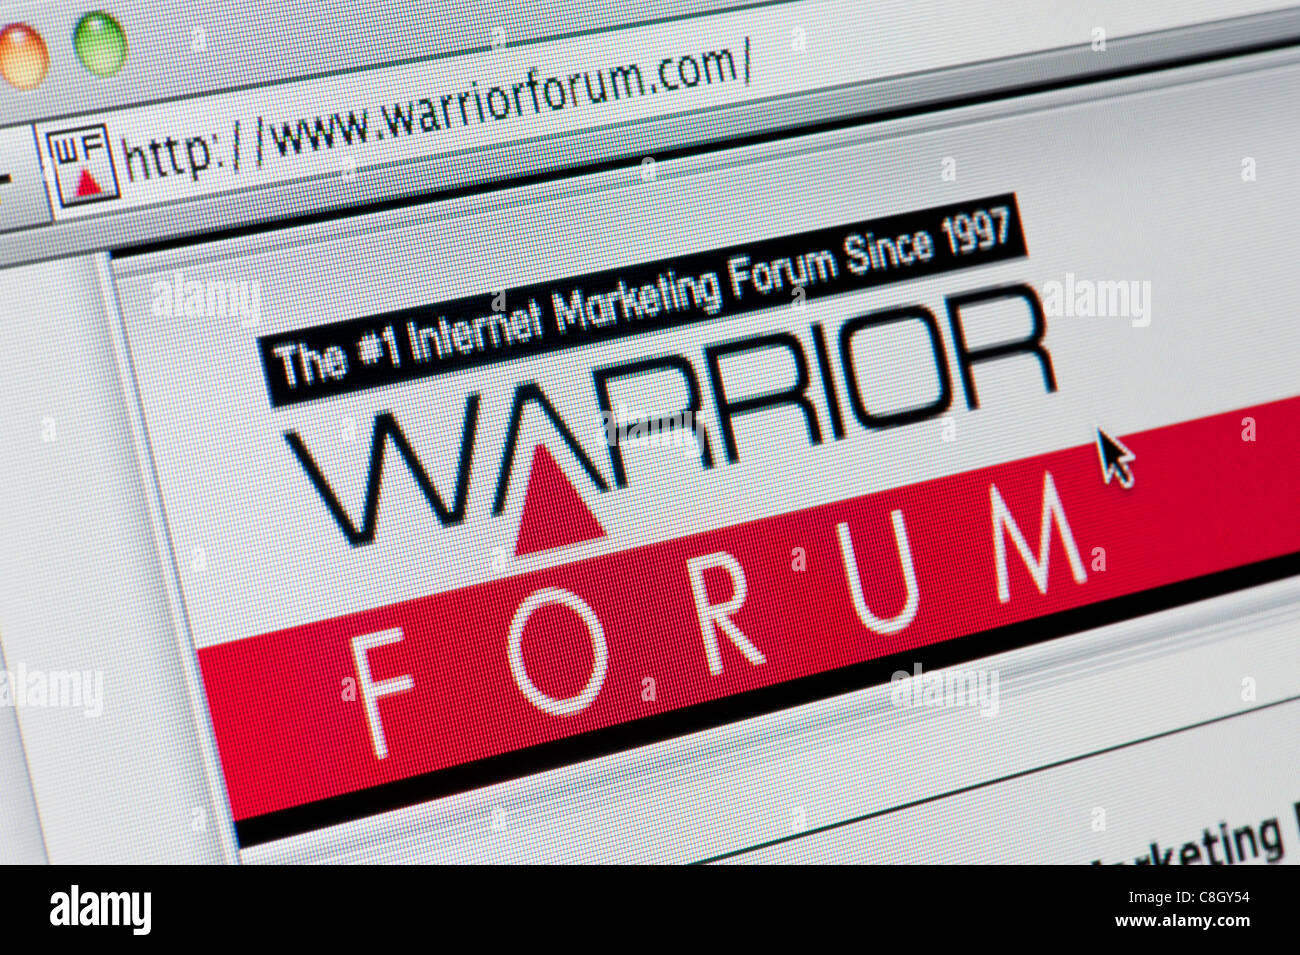 NetWising - Warrior Forum